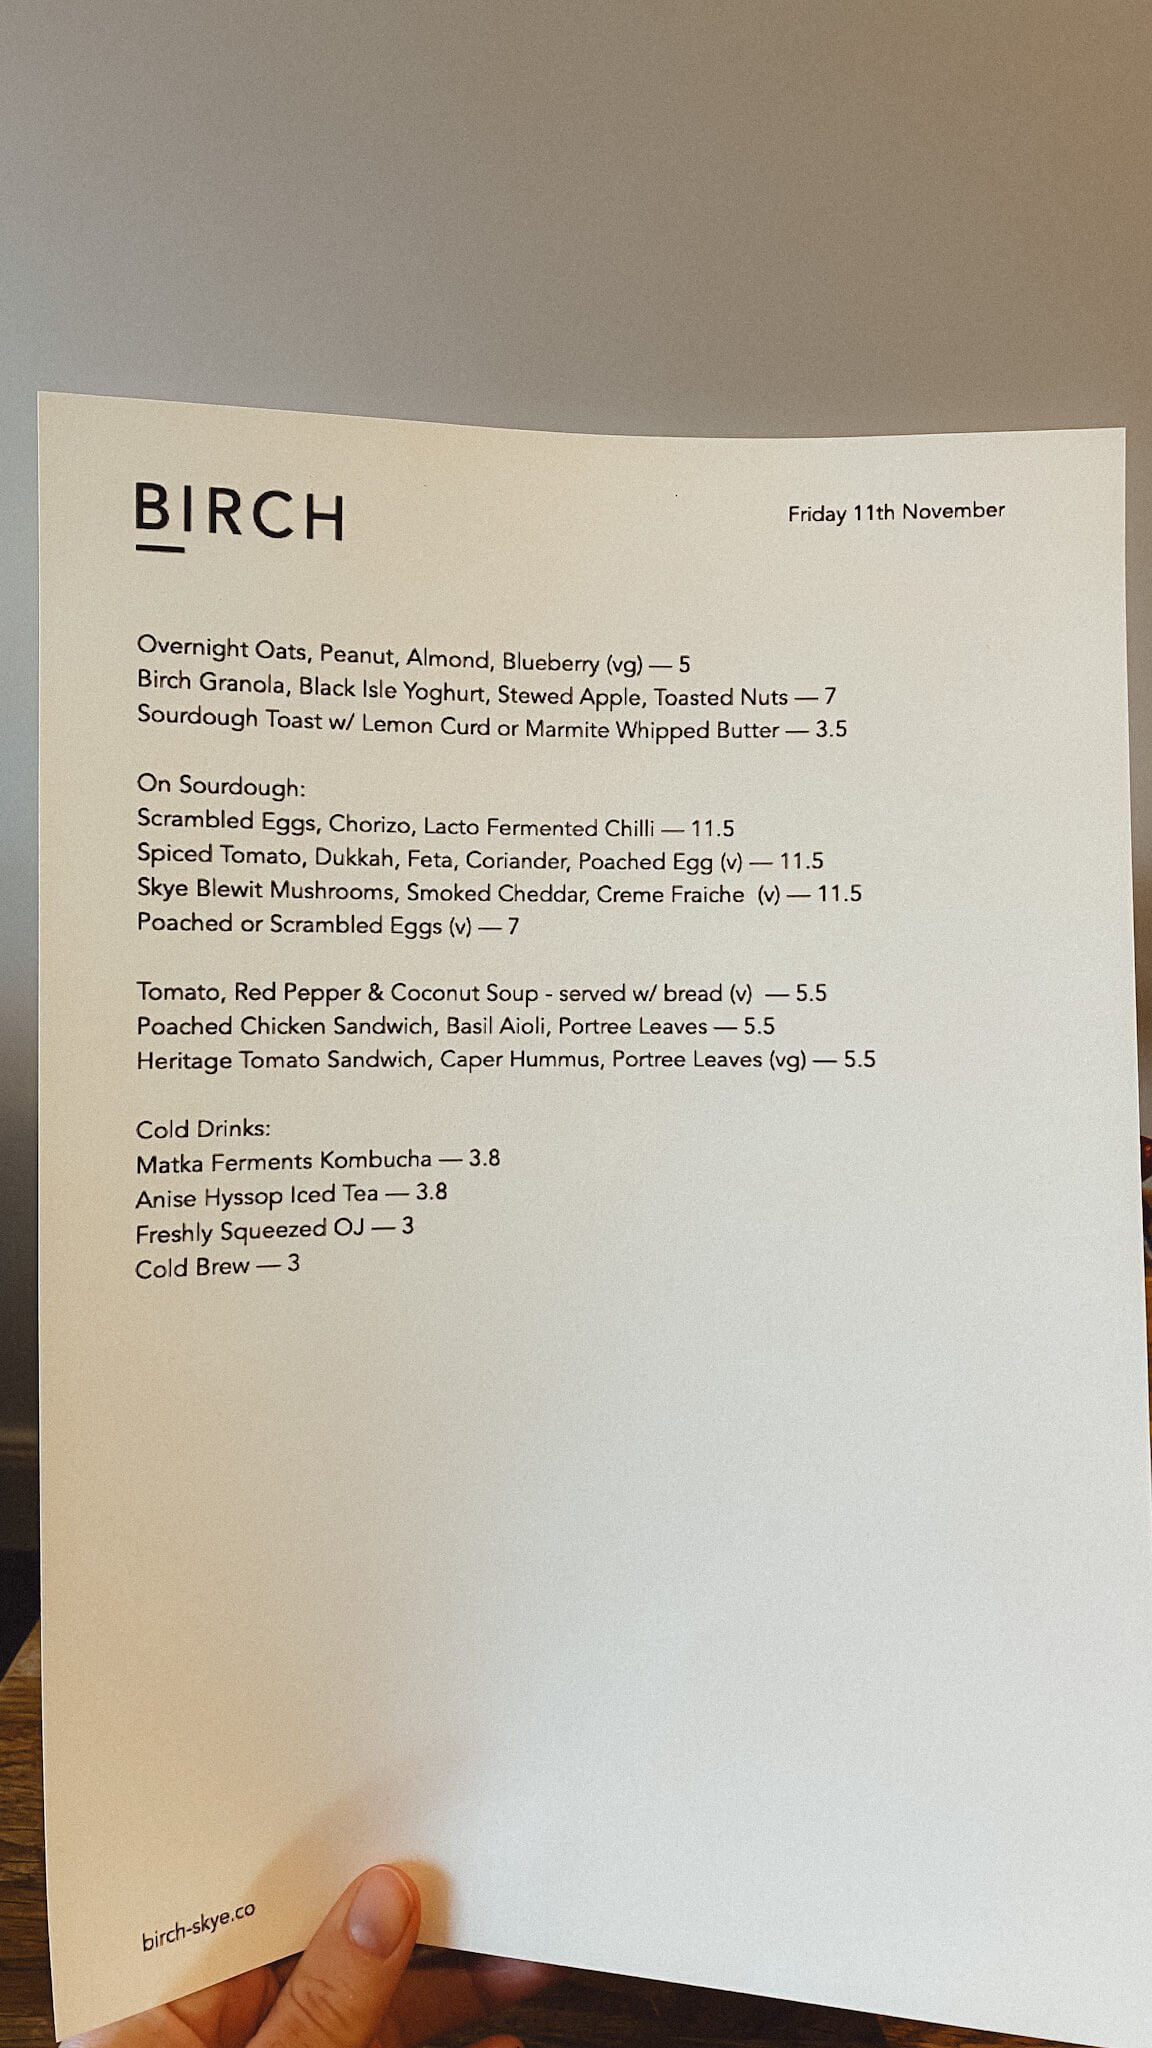 The Birch menu